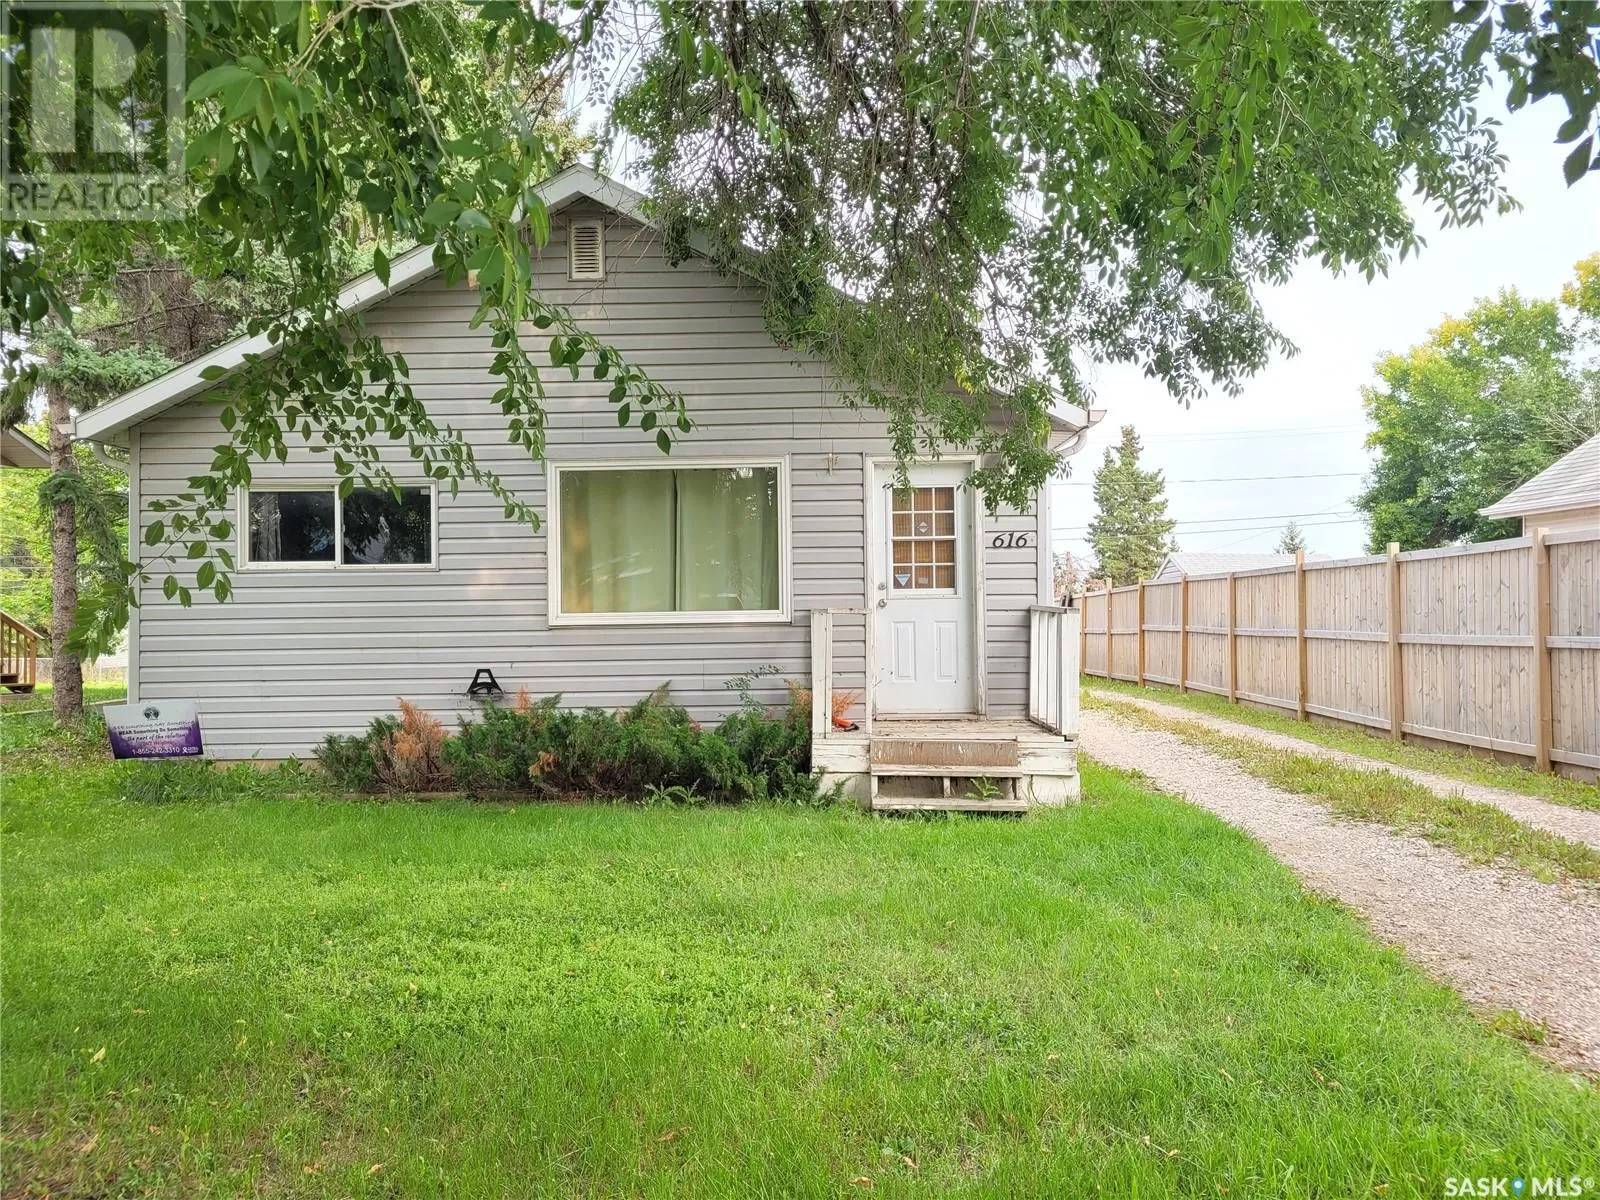 House for rent: 616 1st Street E, Meadow Lake, Saskatchewan S9X 1G1